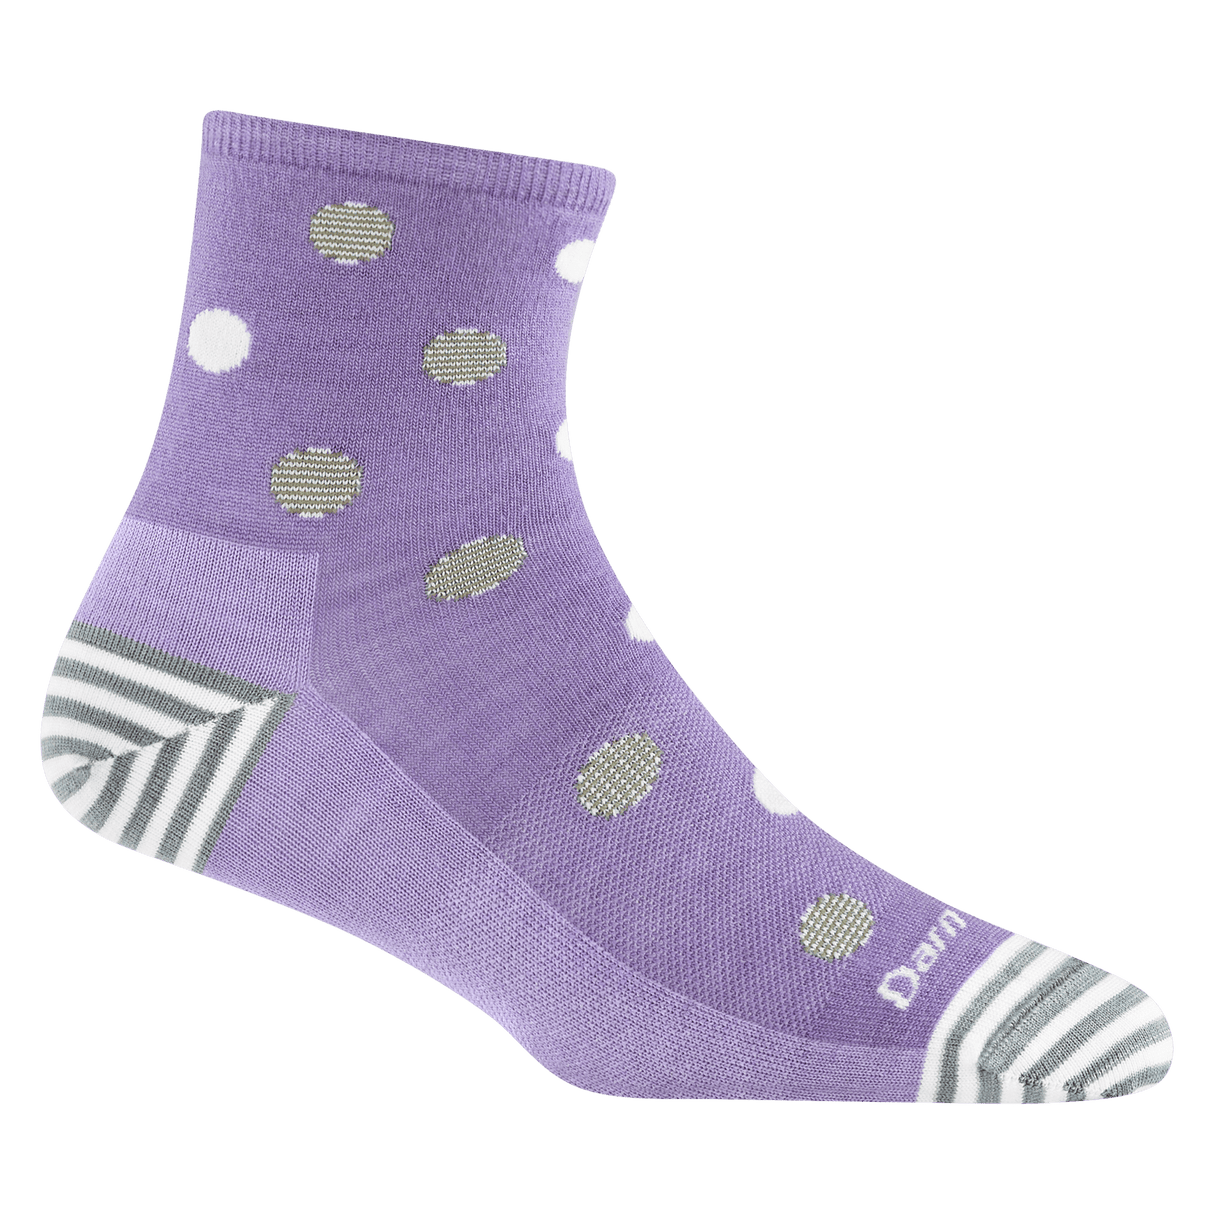 Darn Tough Womens Dottie Shorty Lightweight Lifestyle Socks  -  Small / Lavender